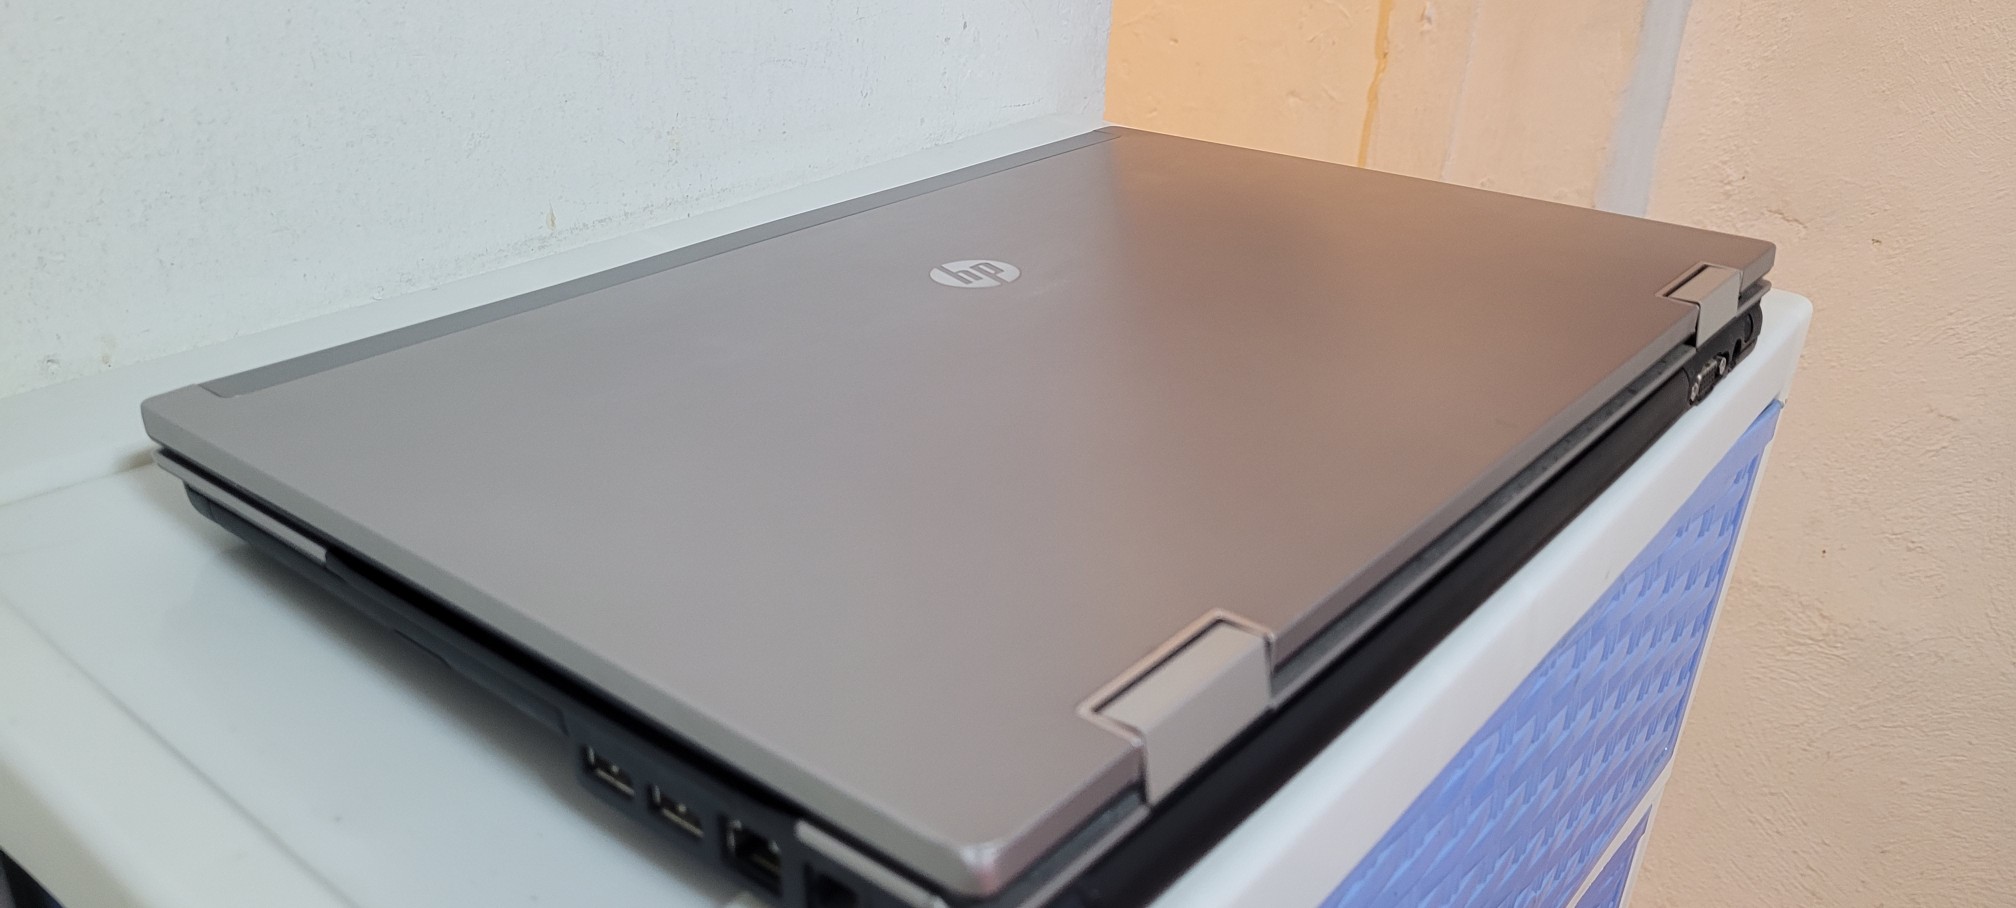 computadoras y laptops - Laptop hp 17 Pulg Core i7 Ram 8gb SSD 128GB Nvidea 1gb Dedicada 2